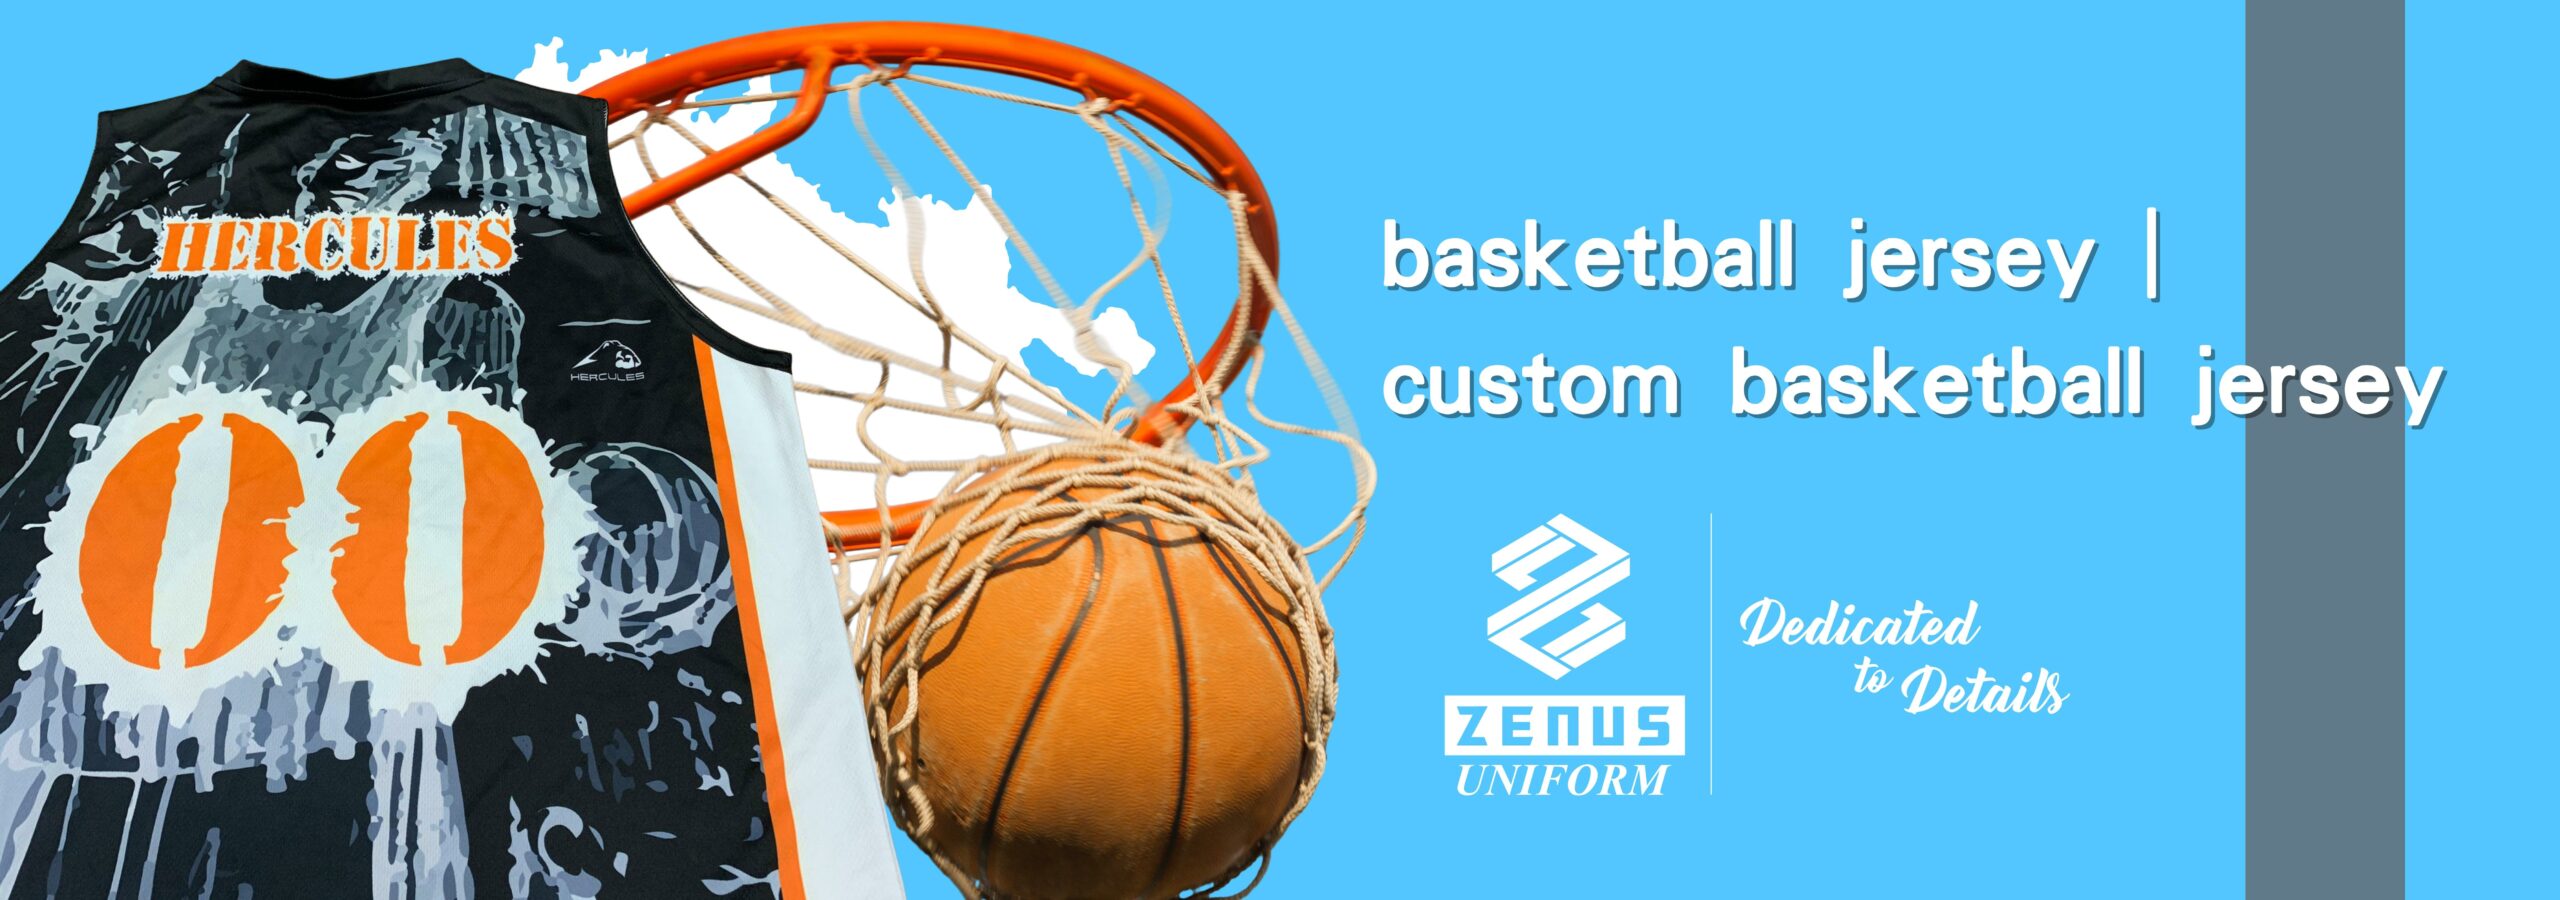 basketball jersey，custom basketball jersey banner 02